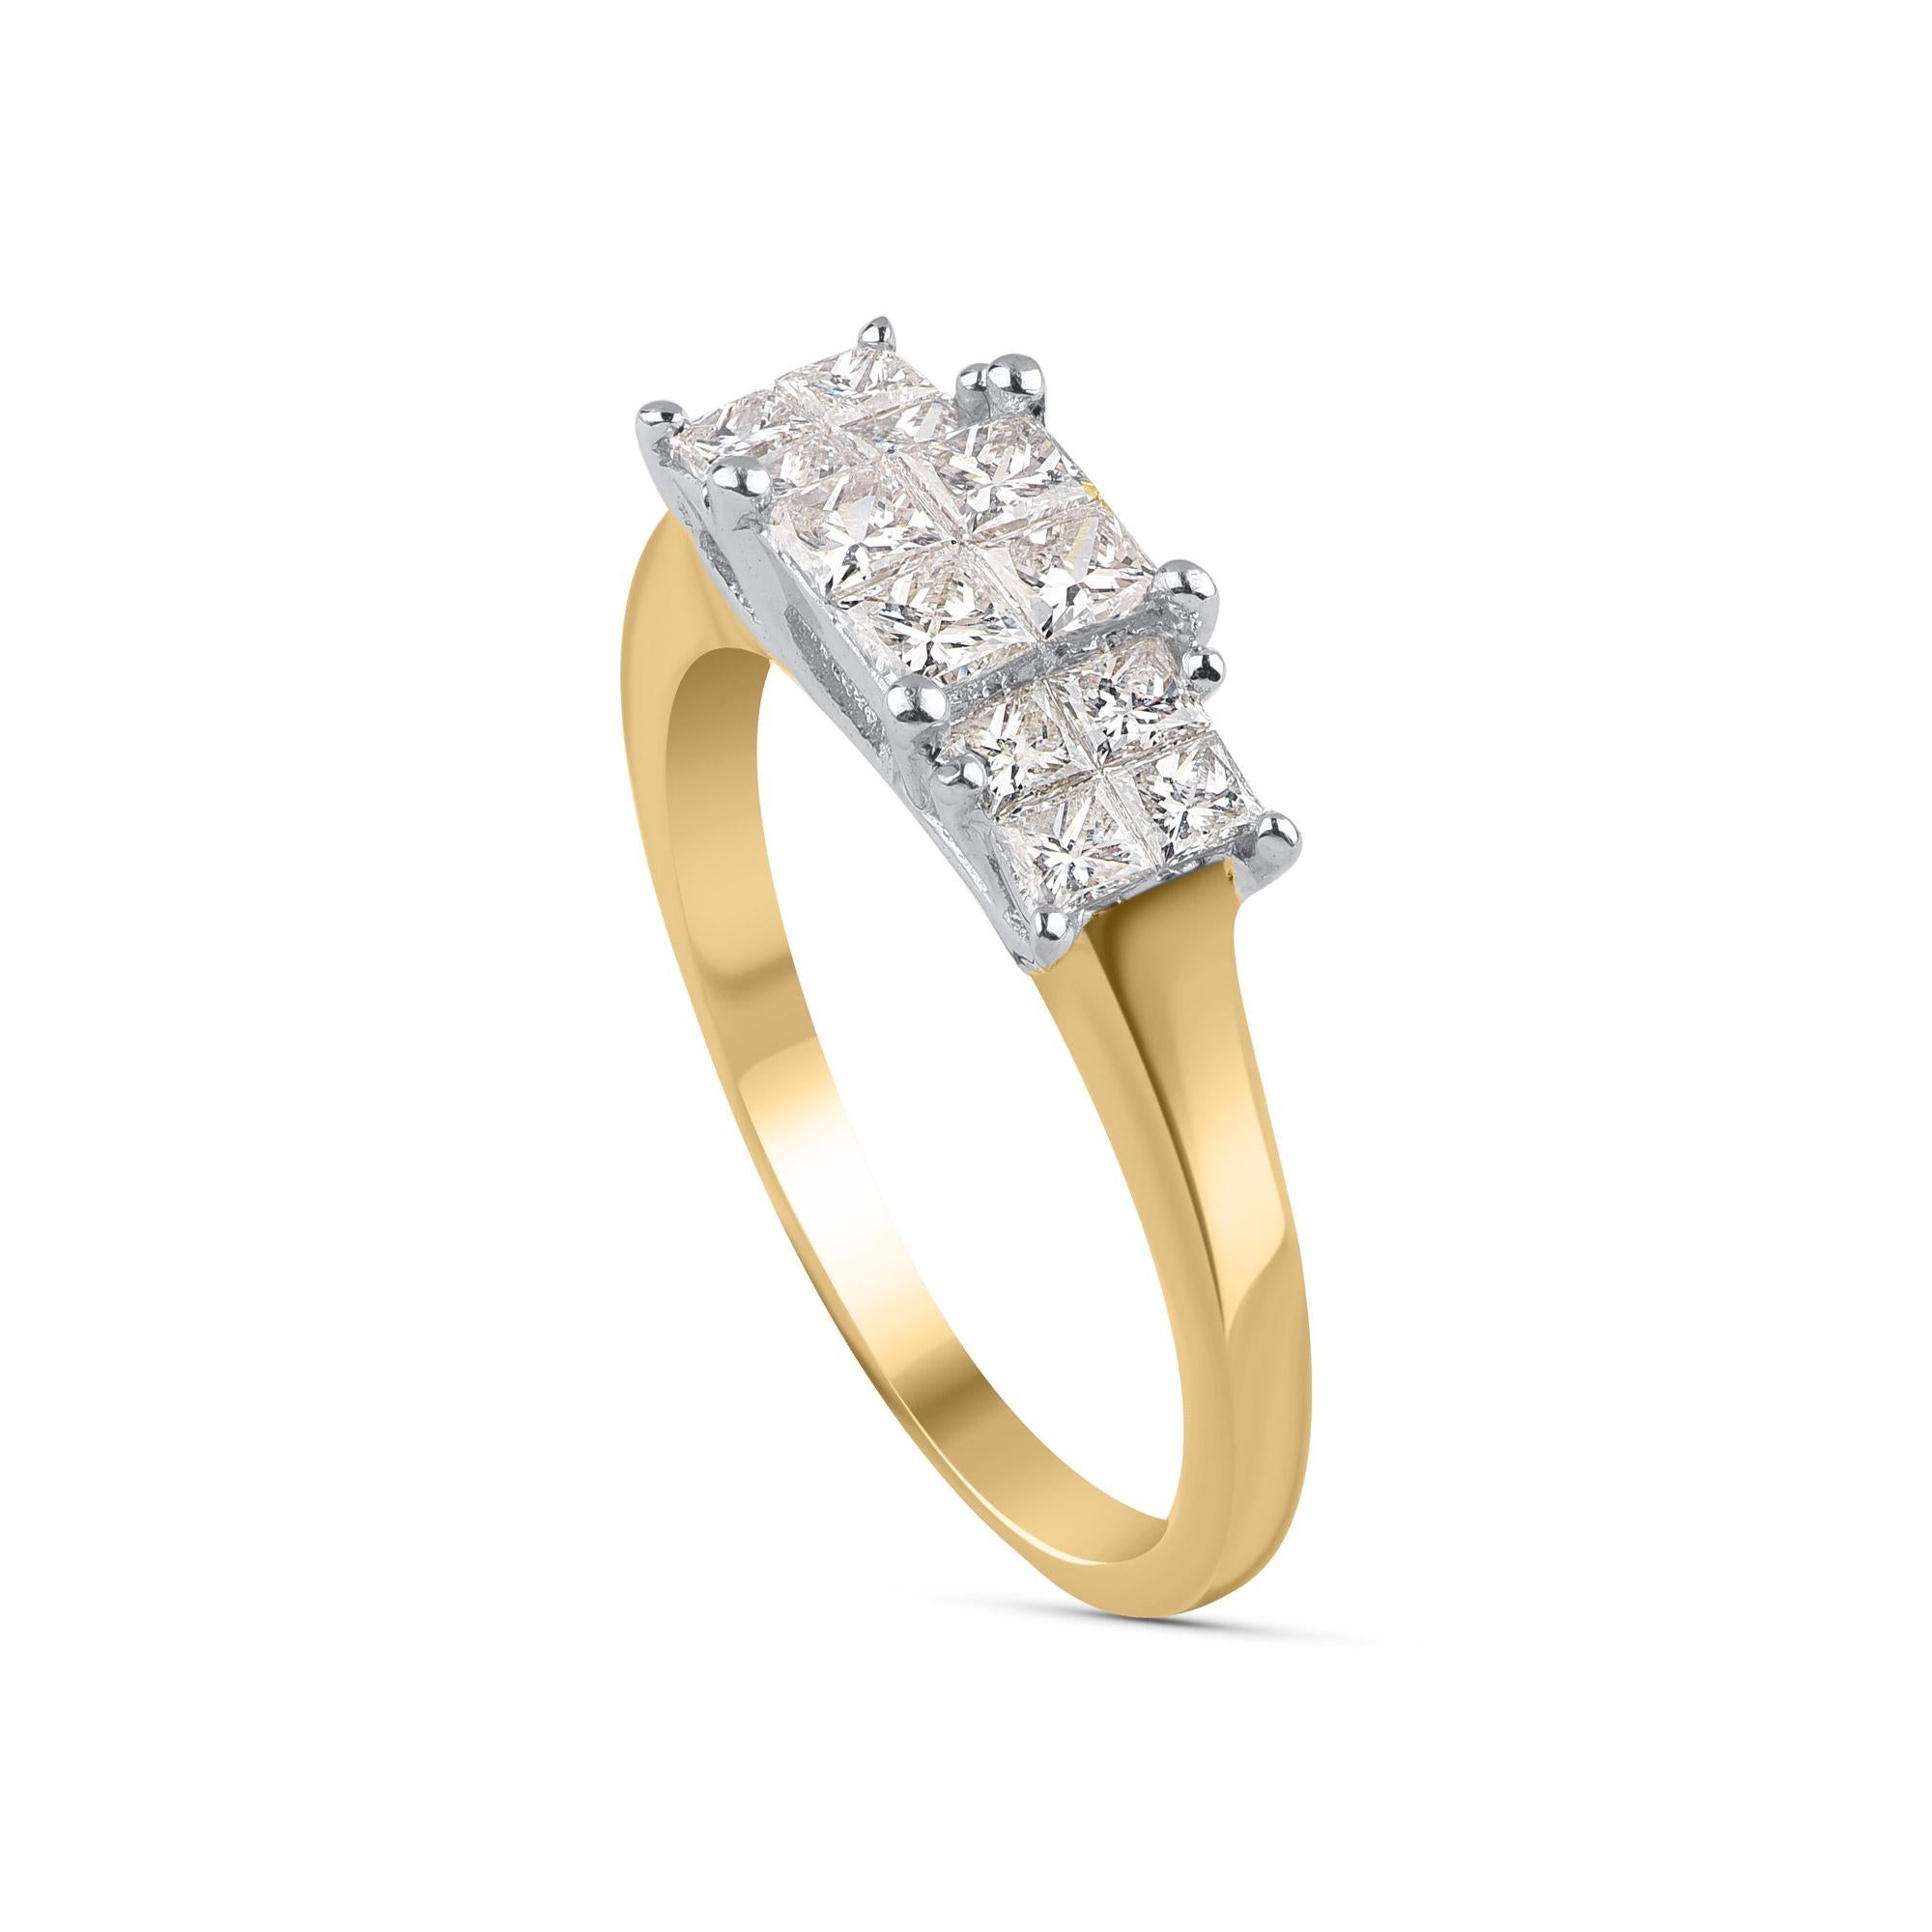 Contemporary TJD 1.0 Carat Princess Cut Diamond Wedding Ring in 14 Karat Yellow Gold For Sale